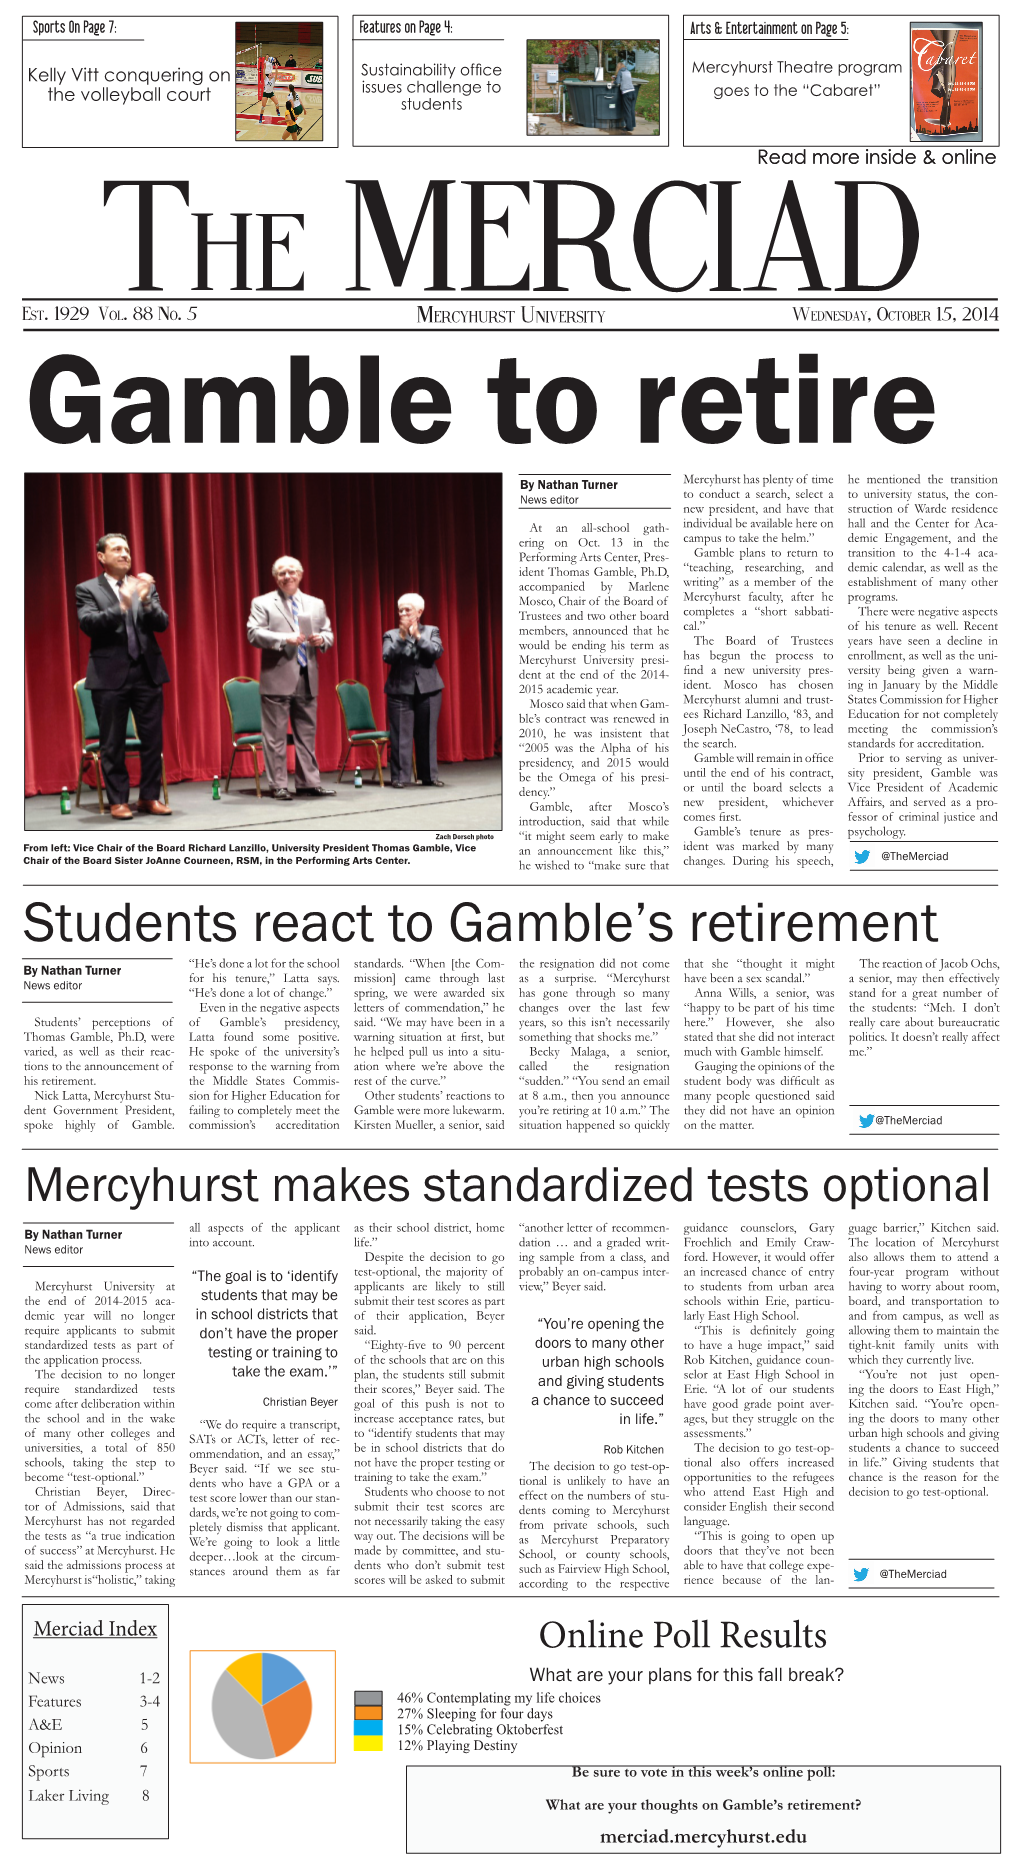 Students React to Gamble's Retirement